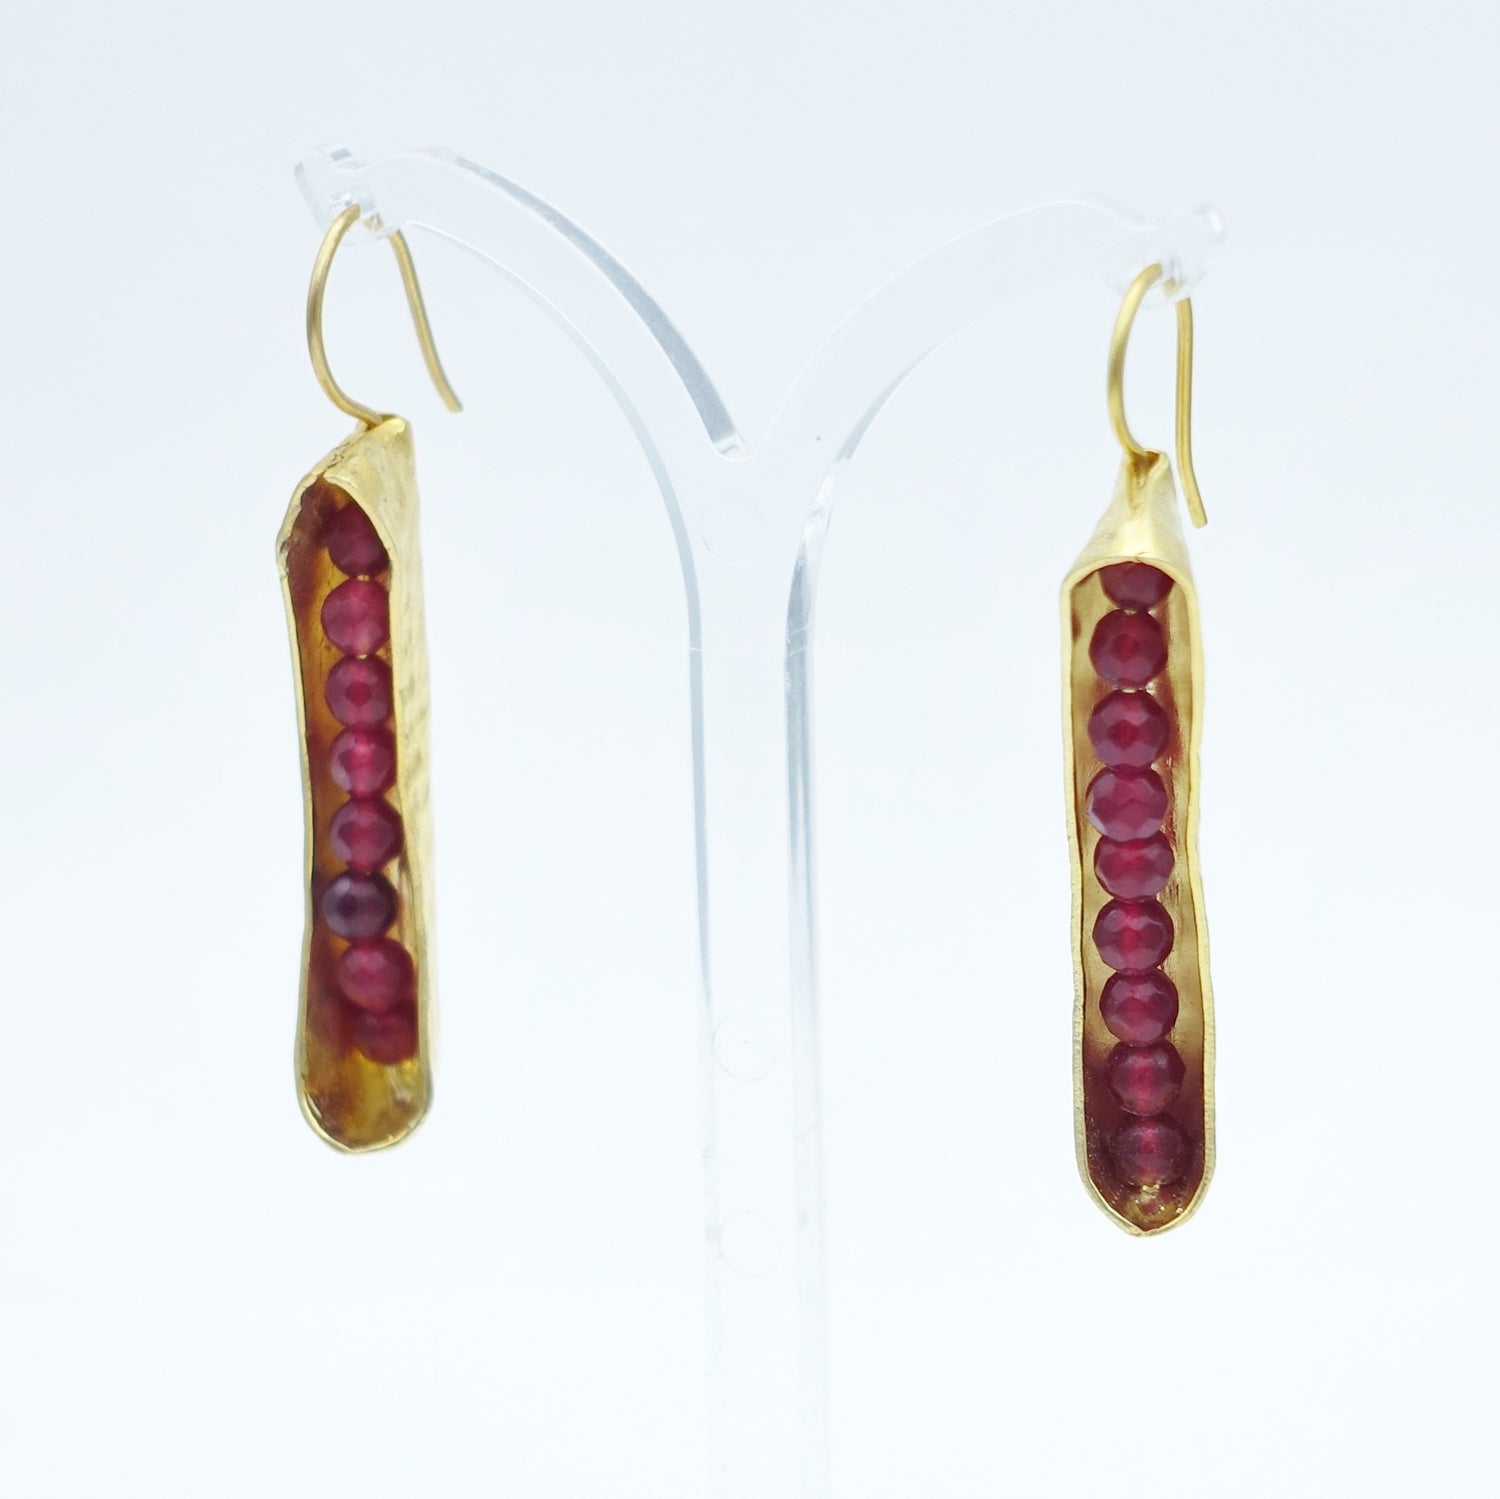 Aylas Seed Pods Jade earrings - 21ct Gold plated semi precious gemstone - Handmade